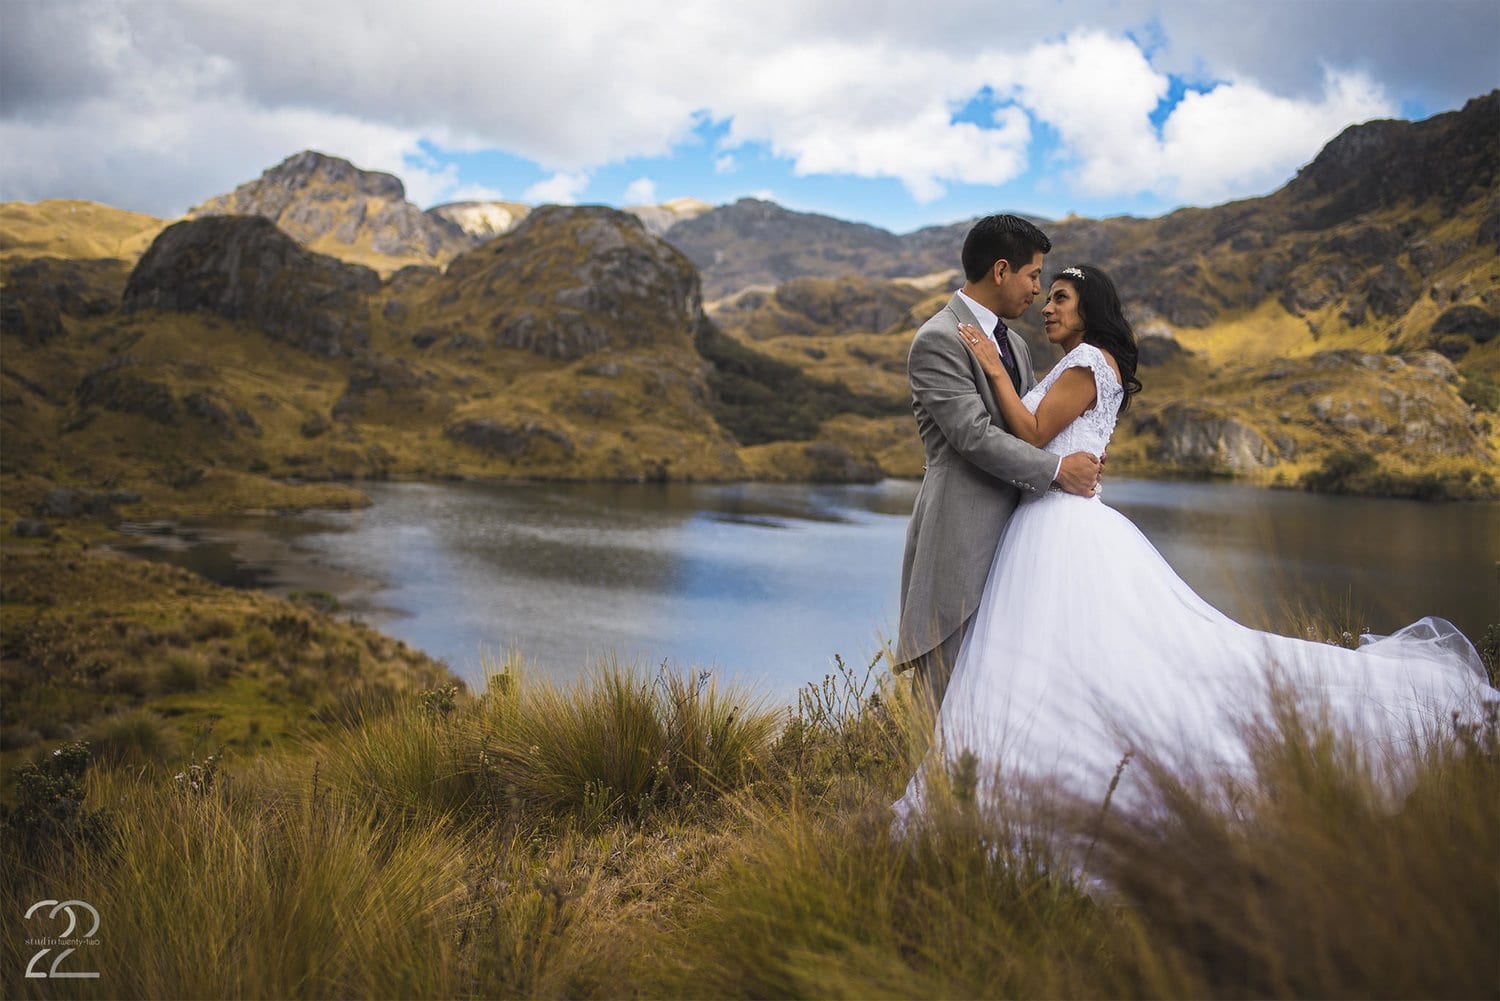 Studio 22 Photography - Destination Wedding in Ecuador